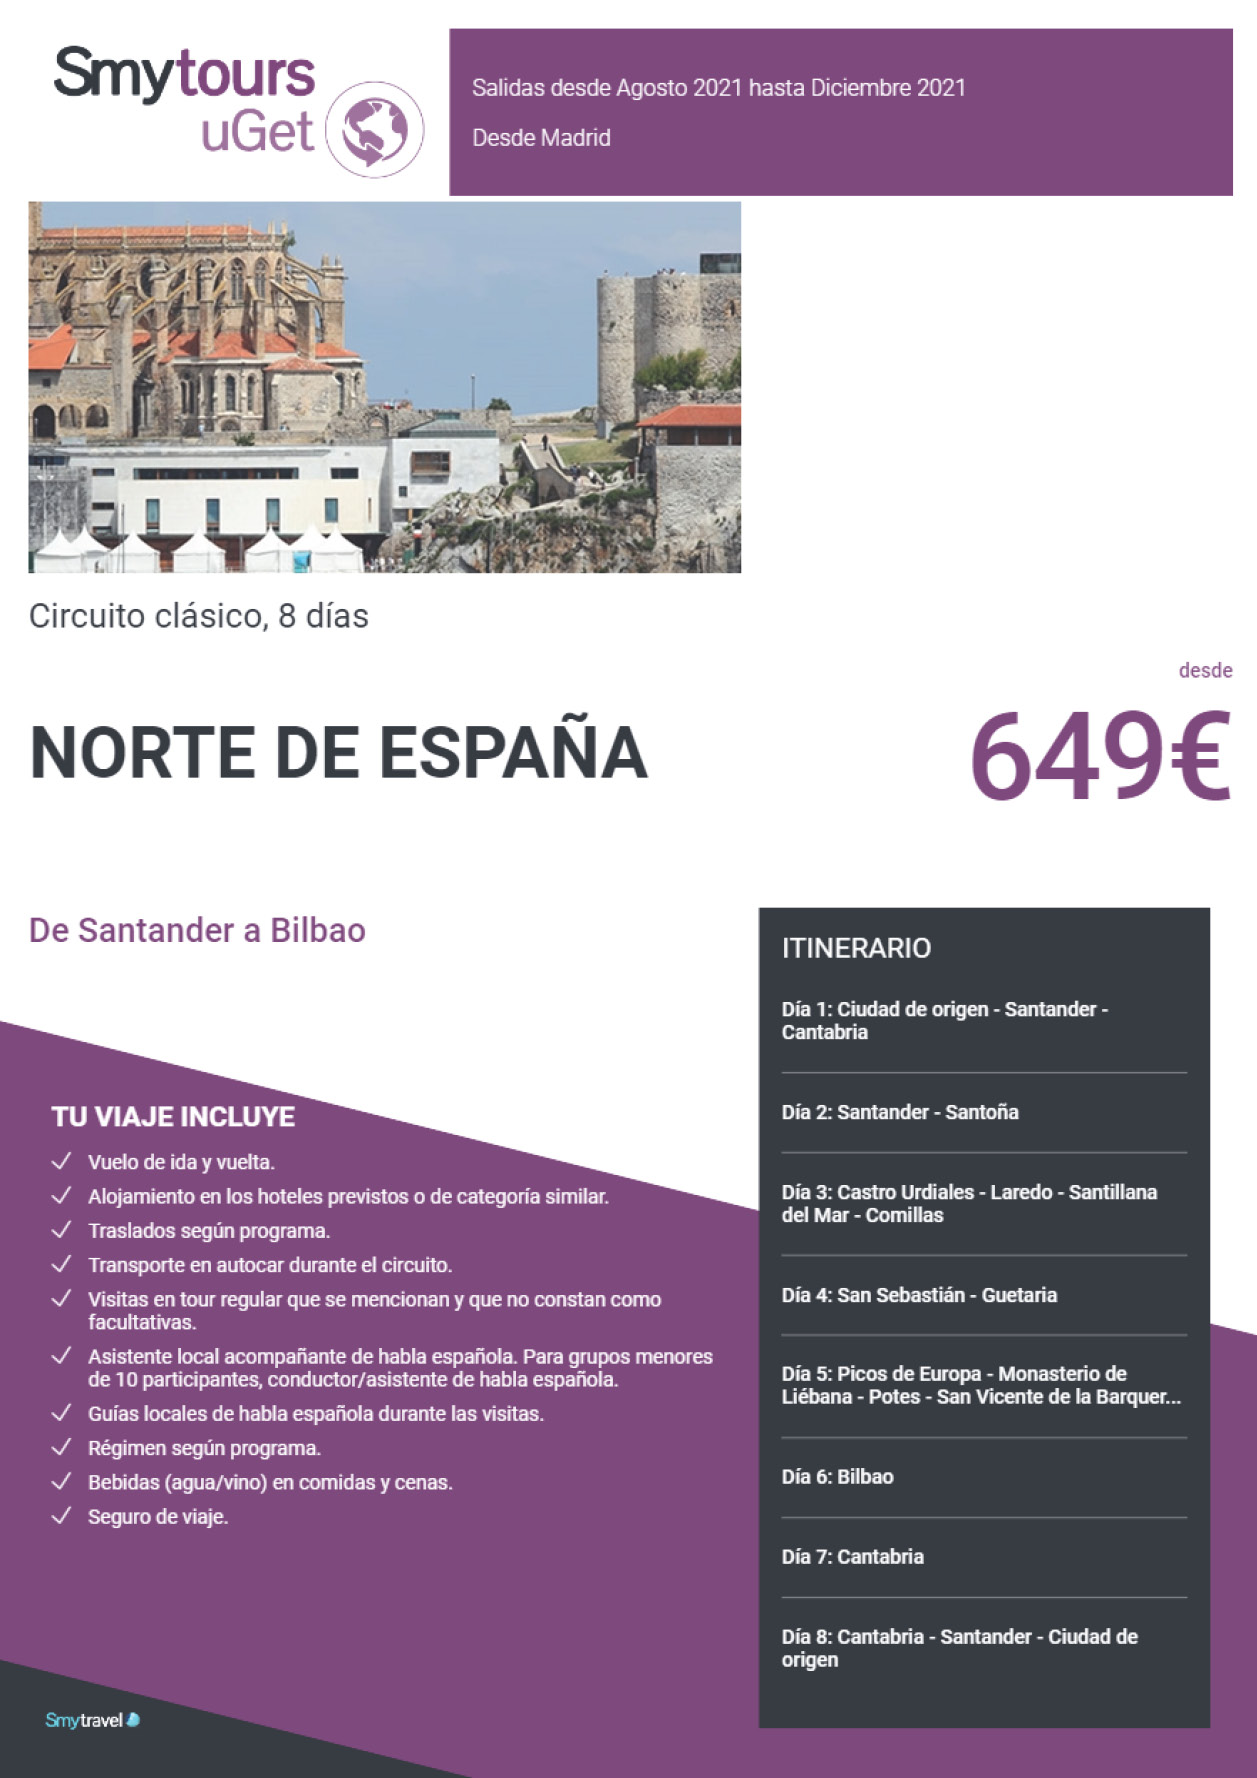 Oferta Smytravel Circuito de Santander a Bilbao 8 dias salidas Madrid desde 649 €